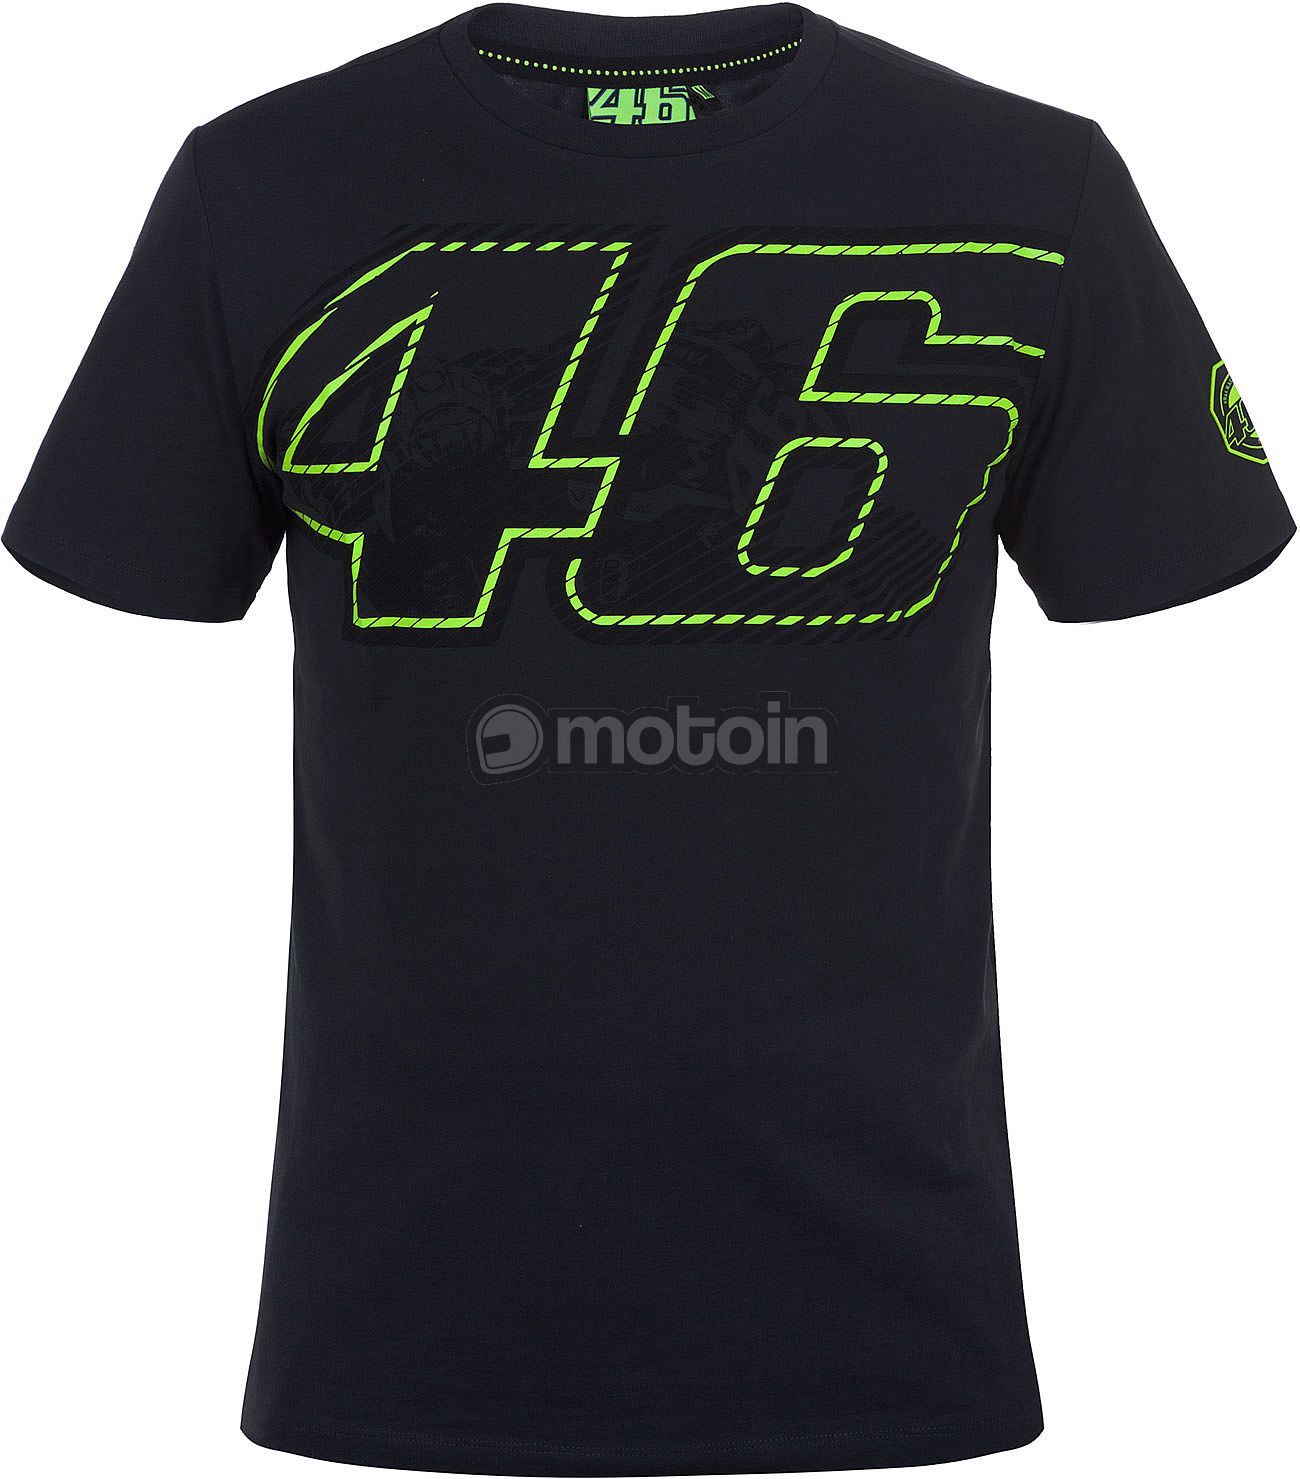 VR46 Racing Apparel VR46, t-shirt